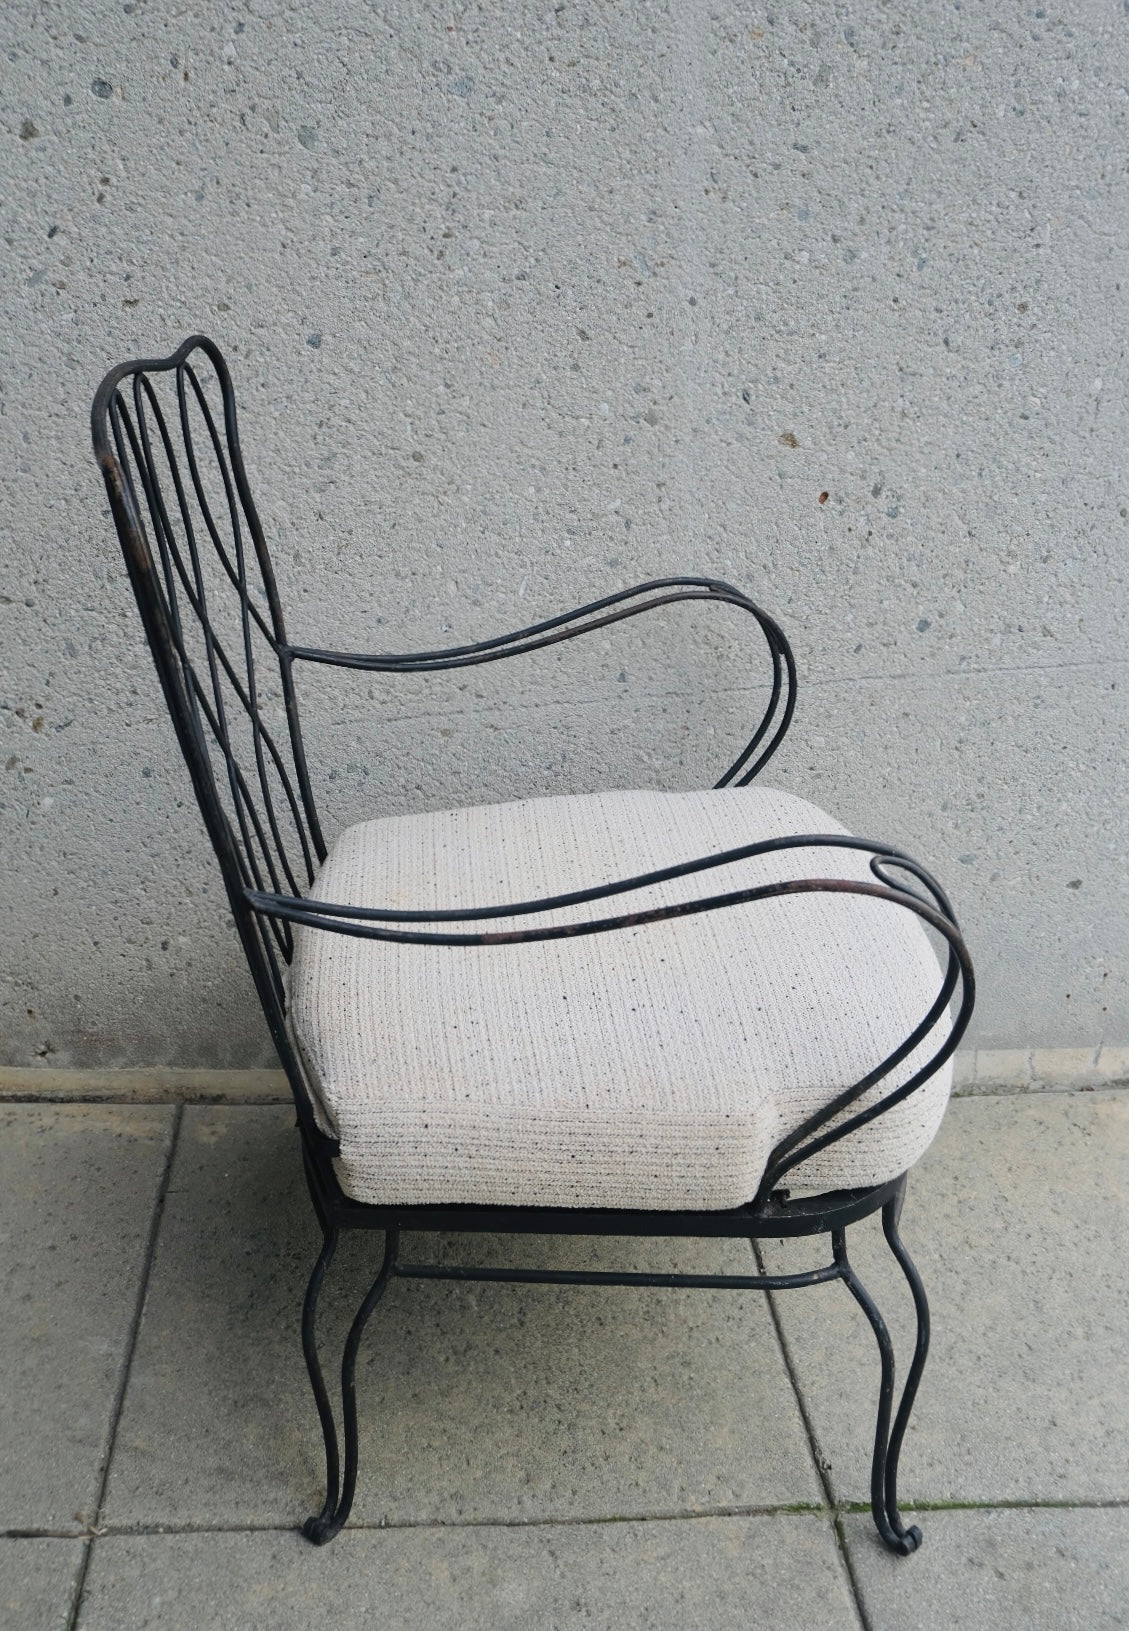 Curvy Wrought Iron Garden Chair (Vintage)